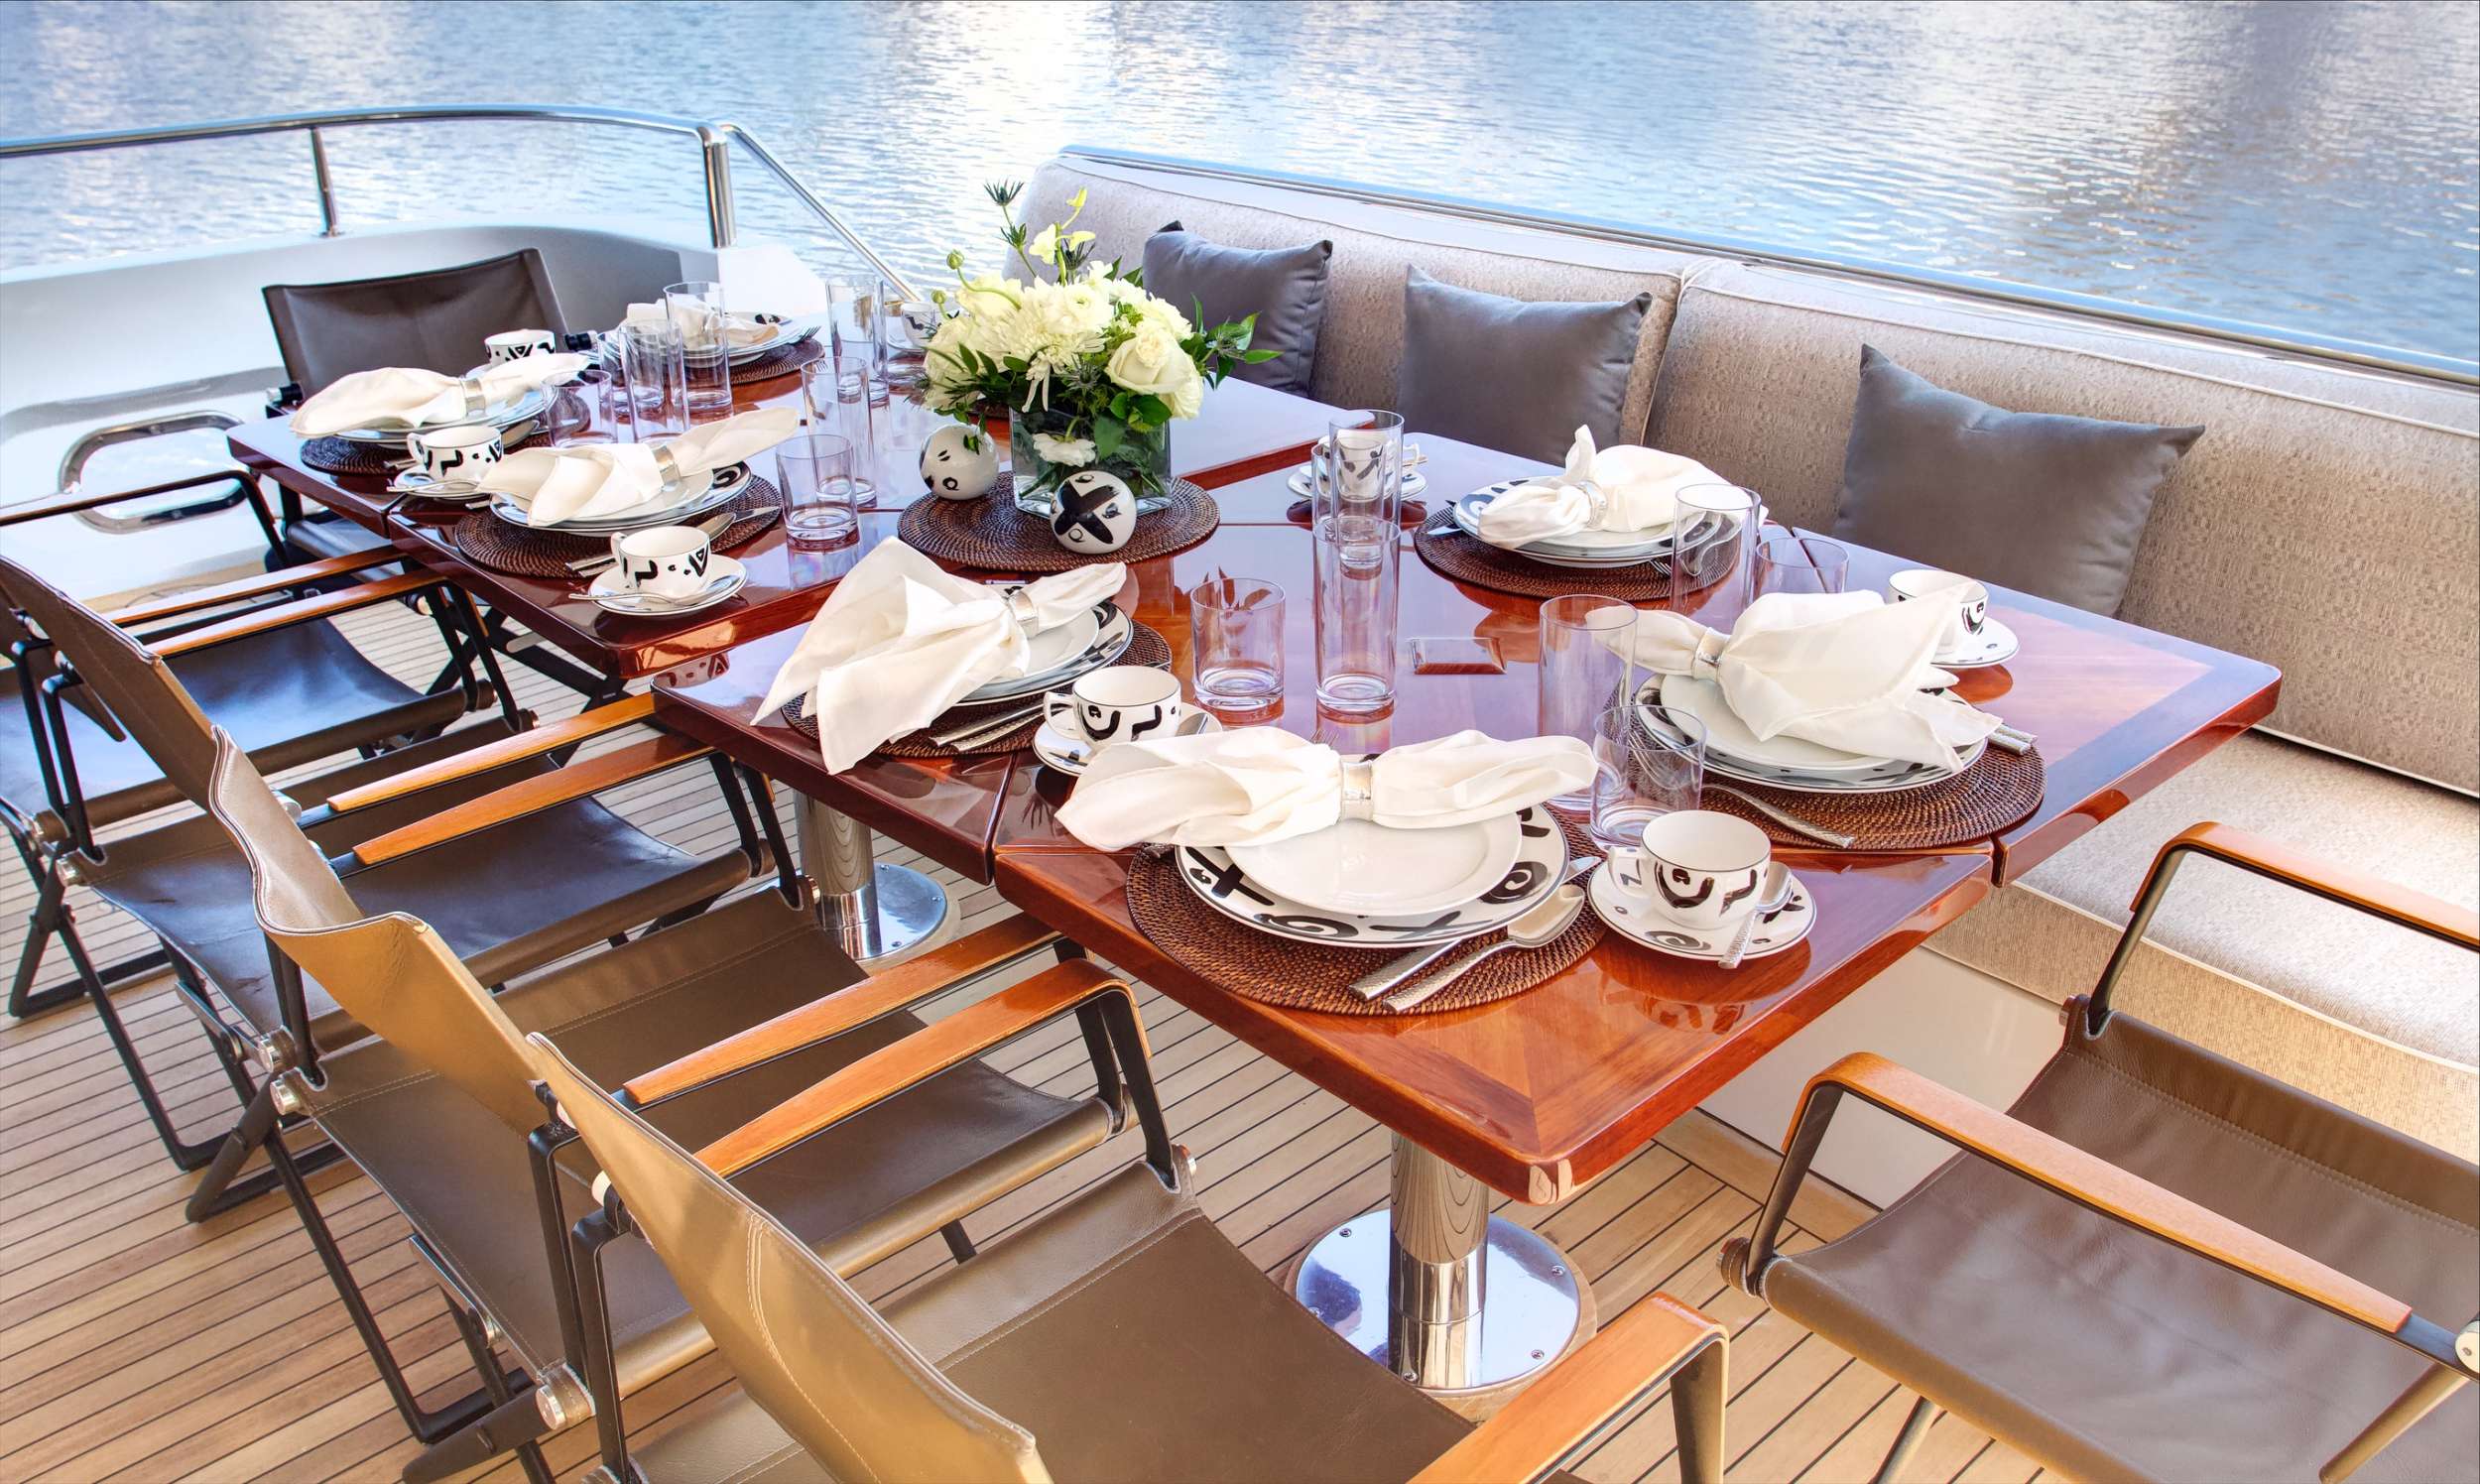 XOXO (118') Yacht Charter - Main Deck Dining